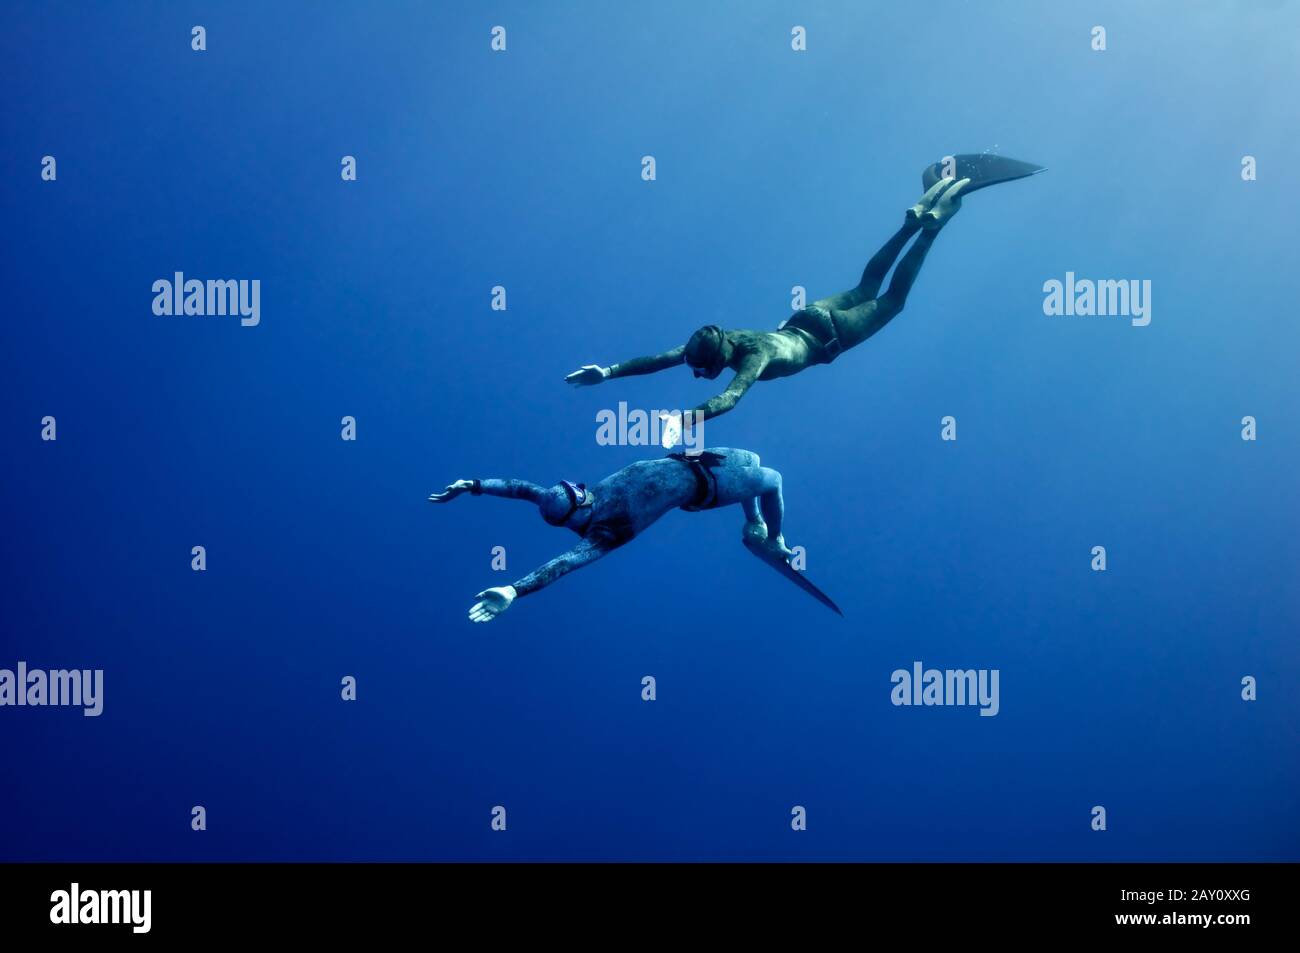 The romantic simultaneous freedive into the depth Stock Photo